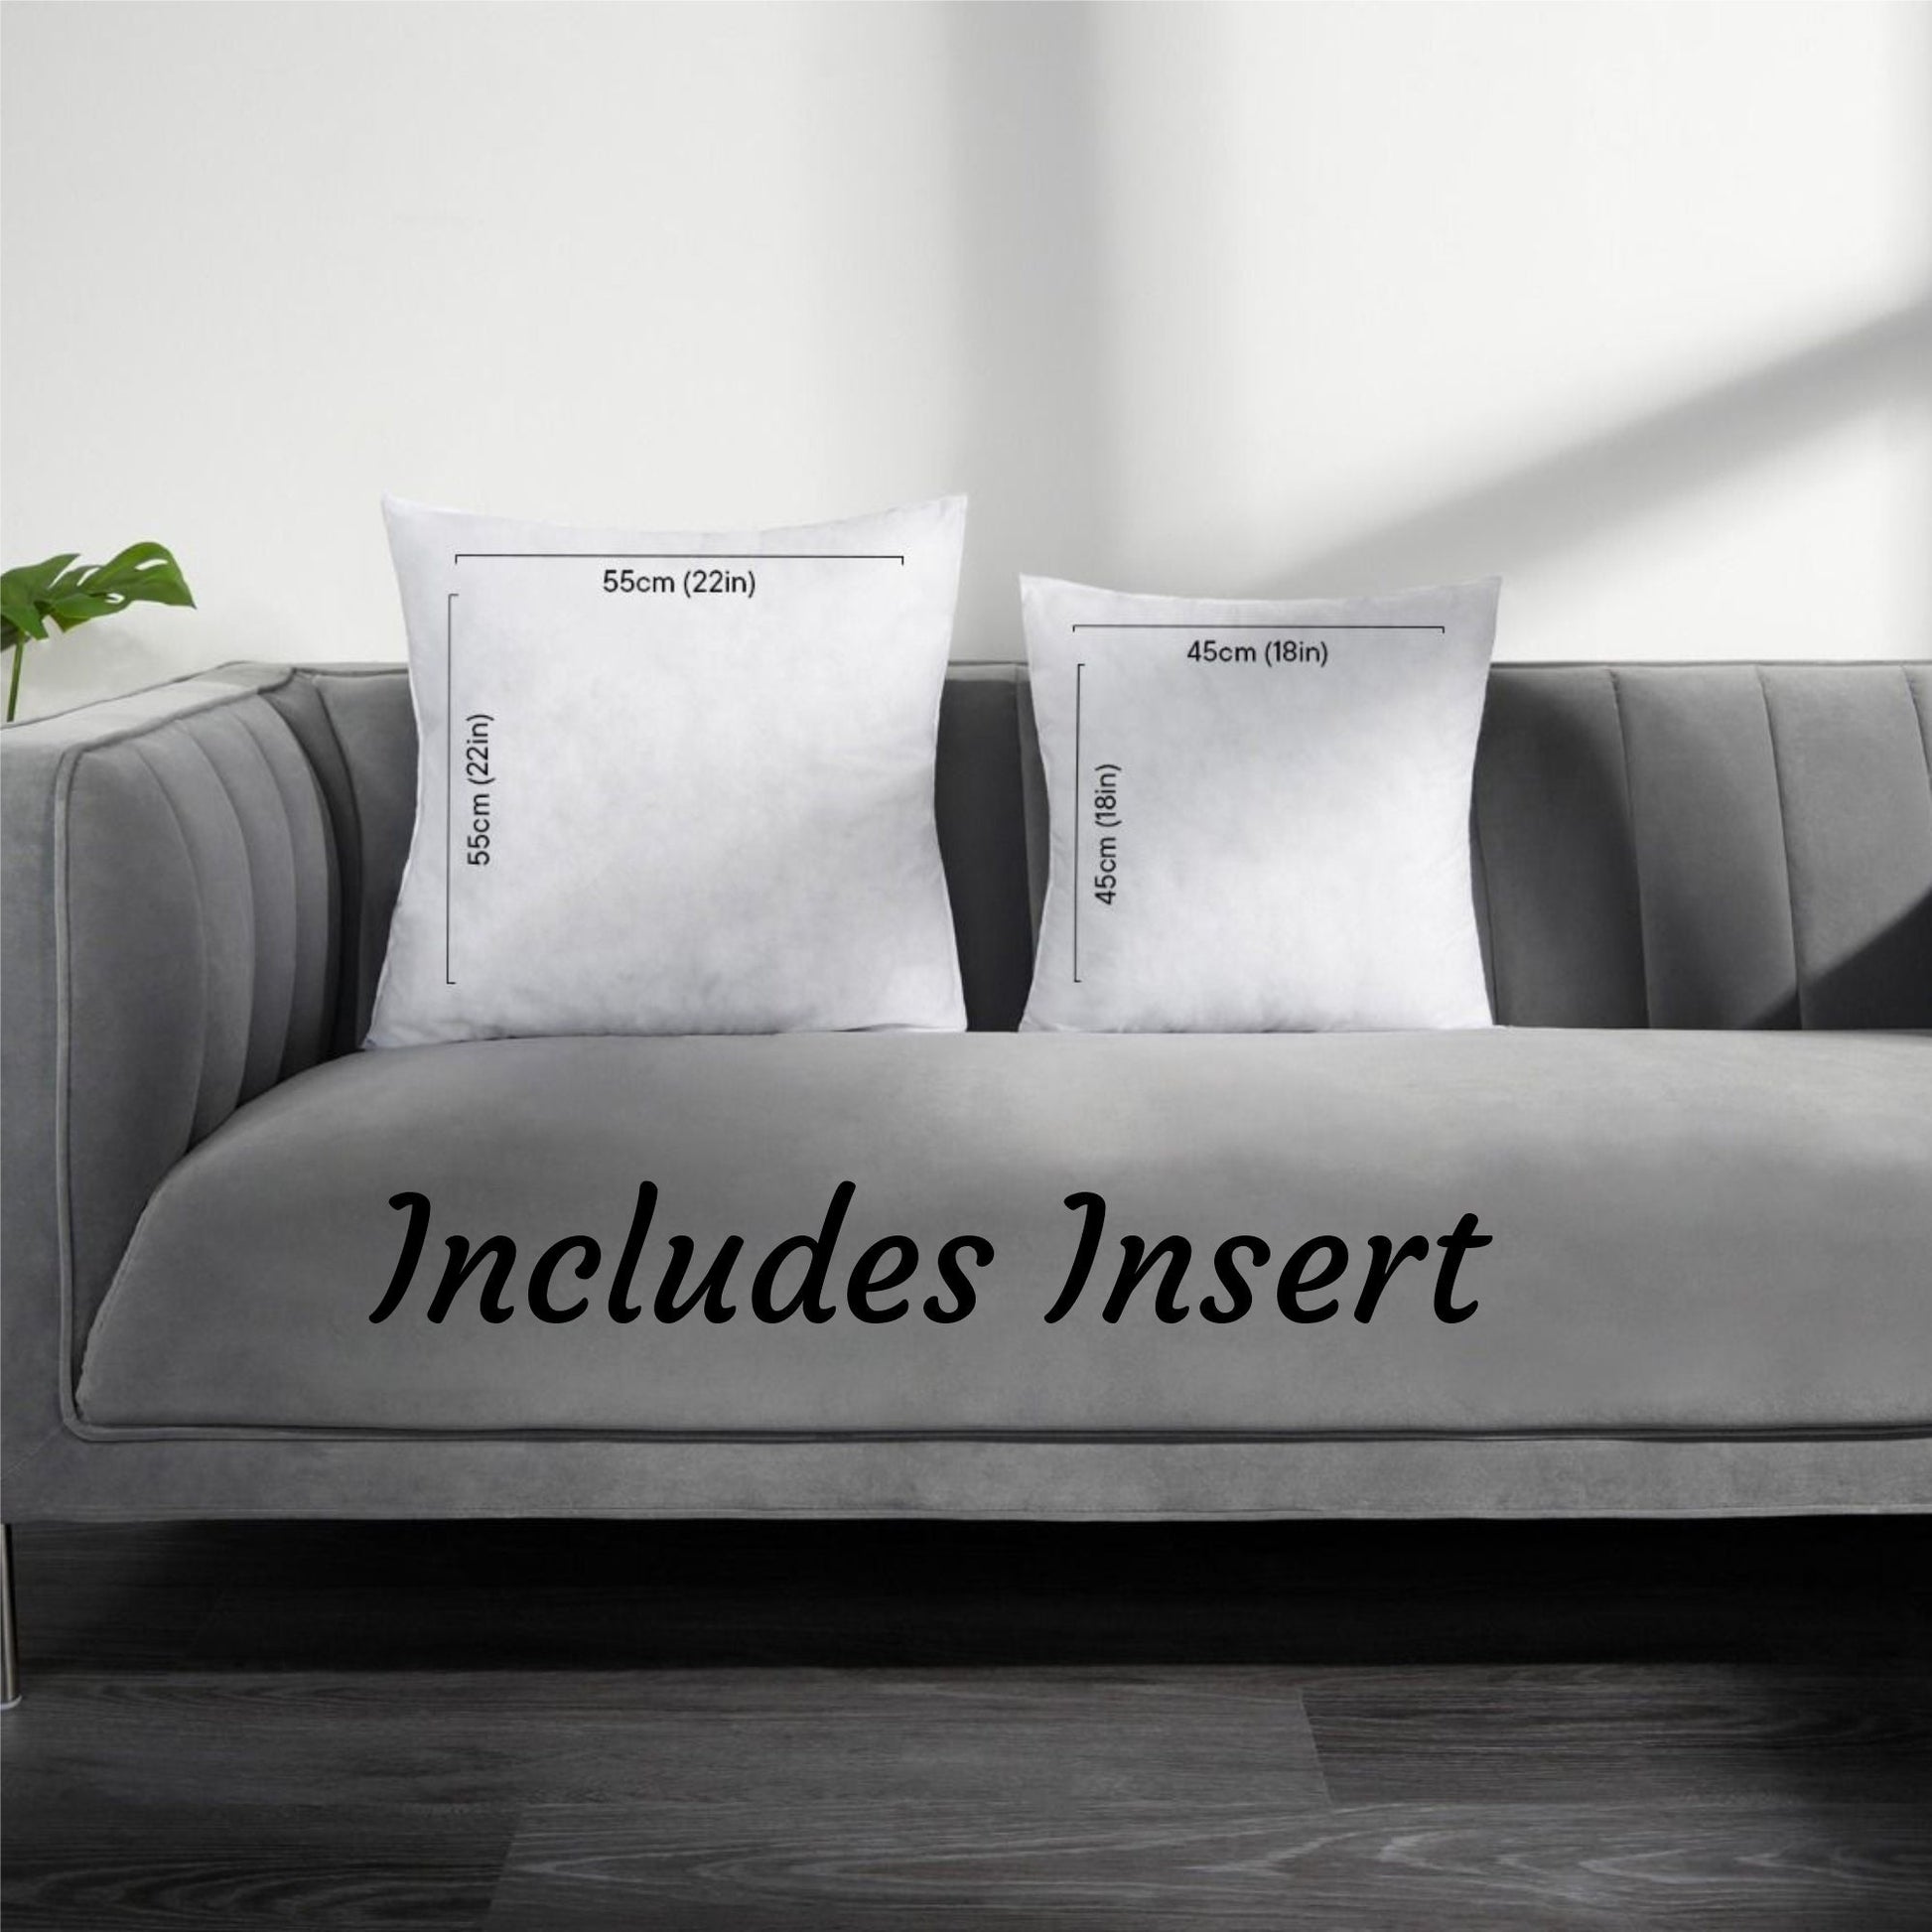 Basset Hound Cushion and Insert with Stunning Fractal Art Design